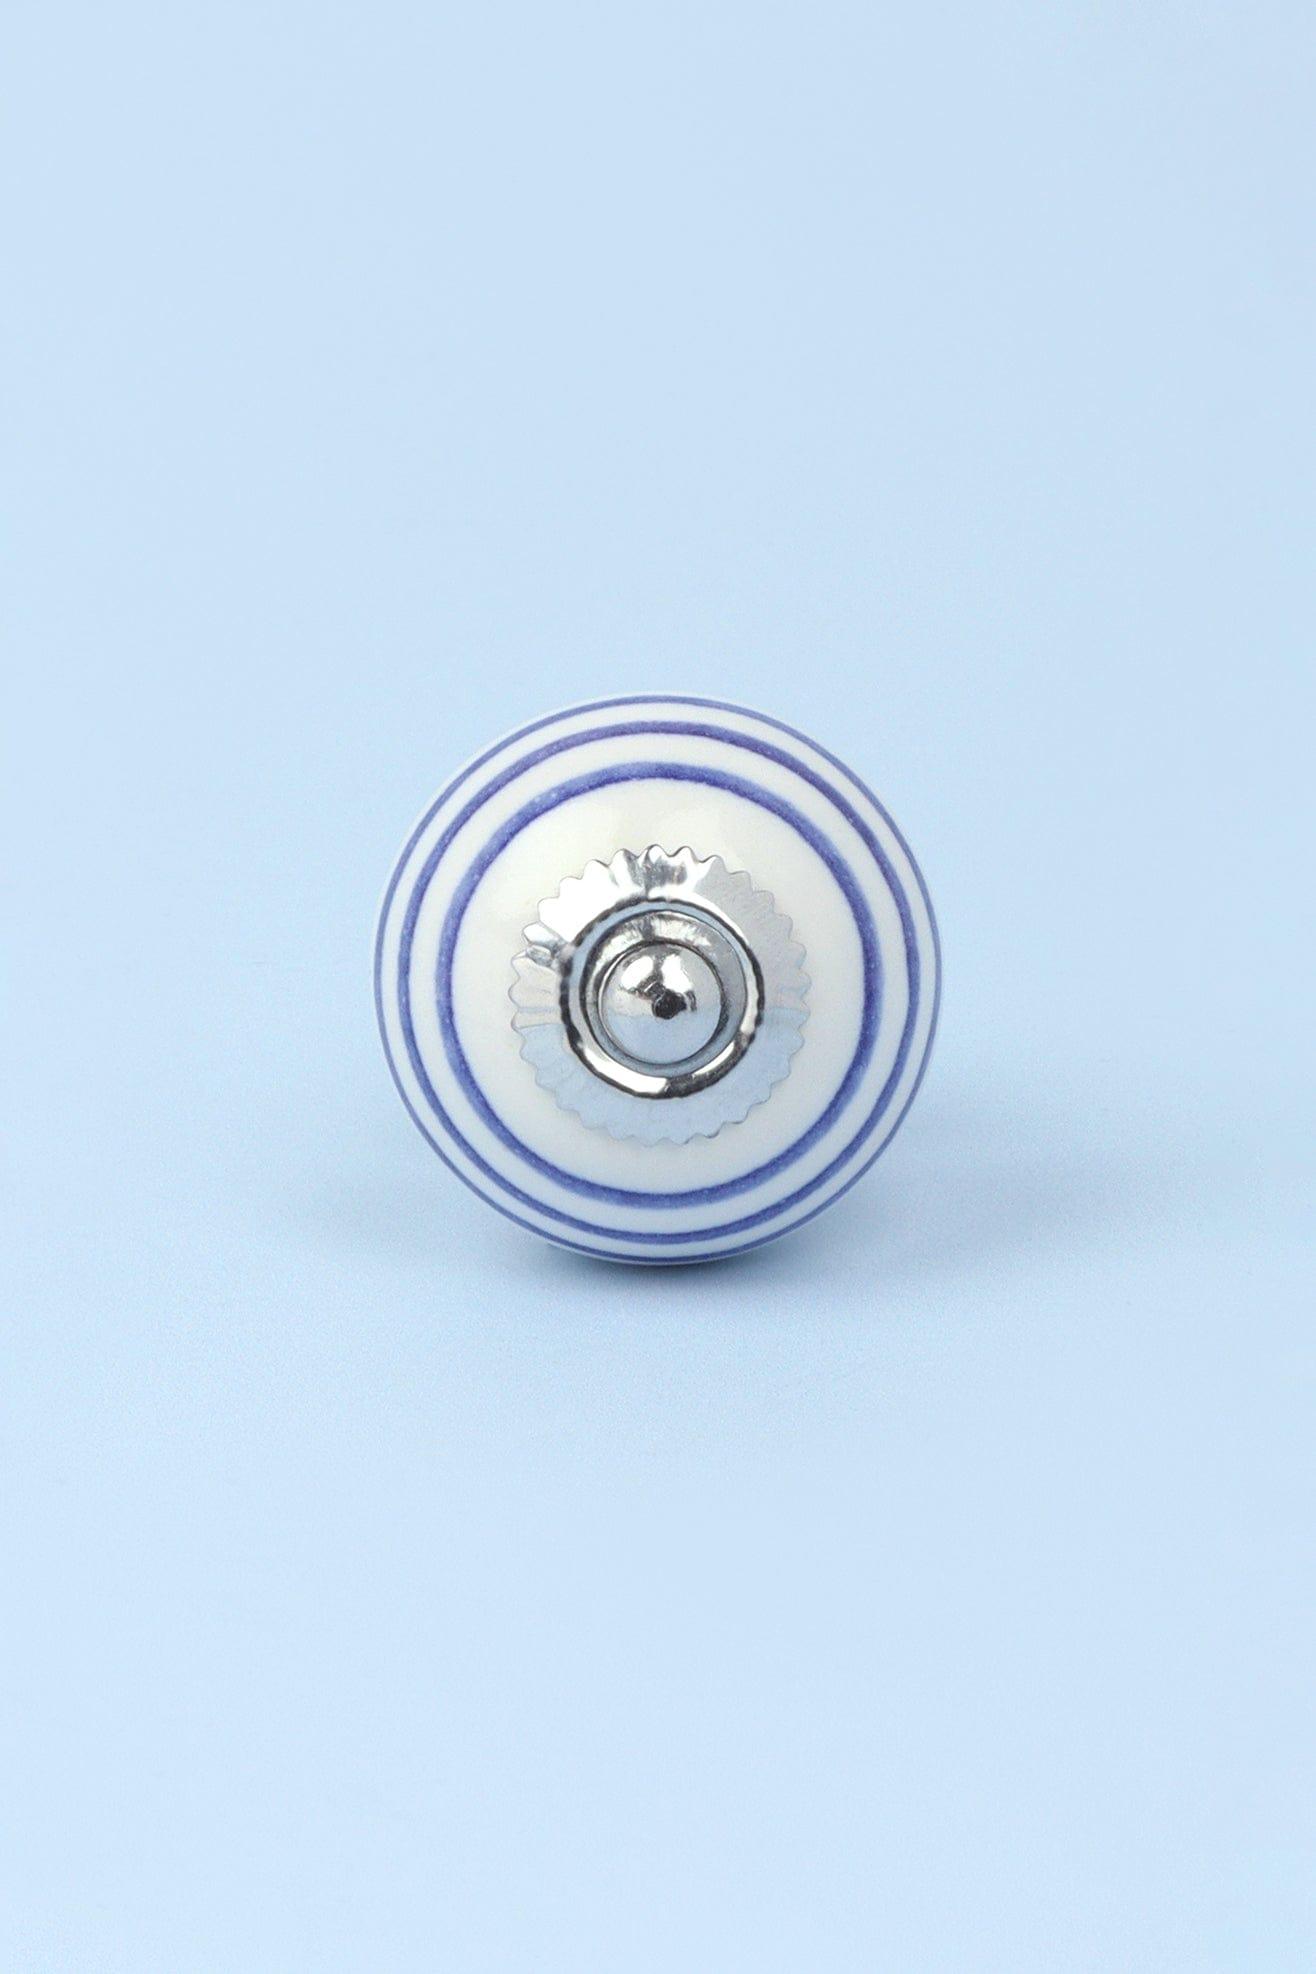 G Decor Door Knobs & Handles Blue Striped on White Base Ceramic Door Knobs Cupboard Pull Handles